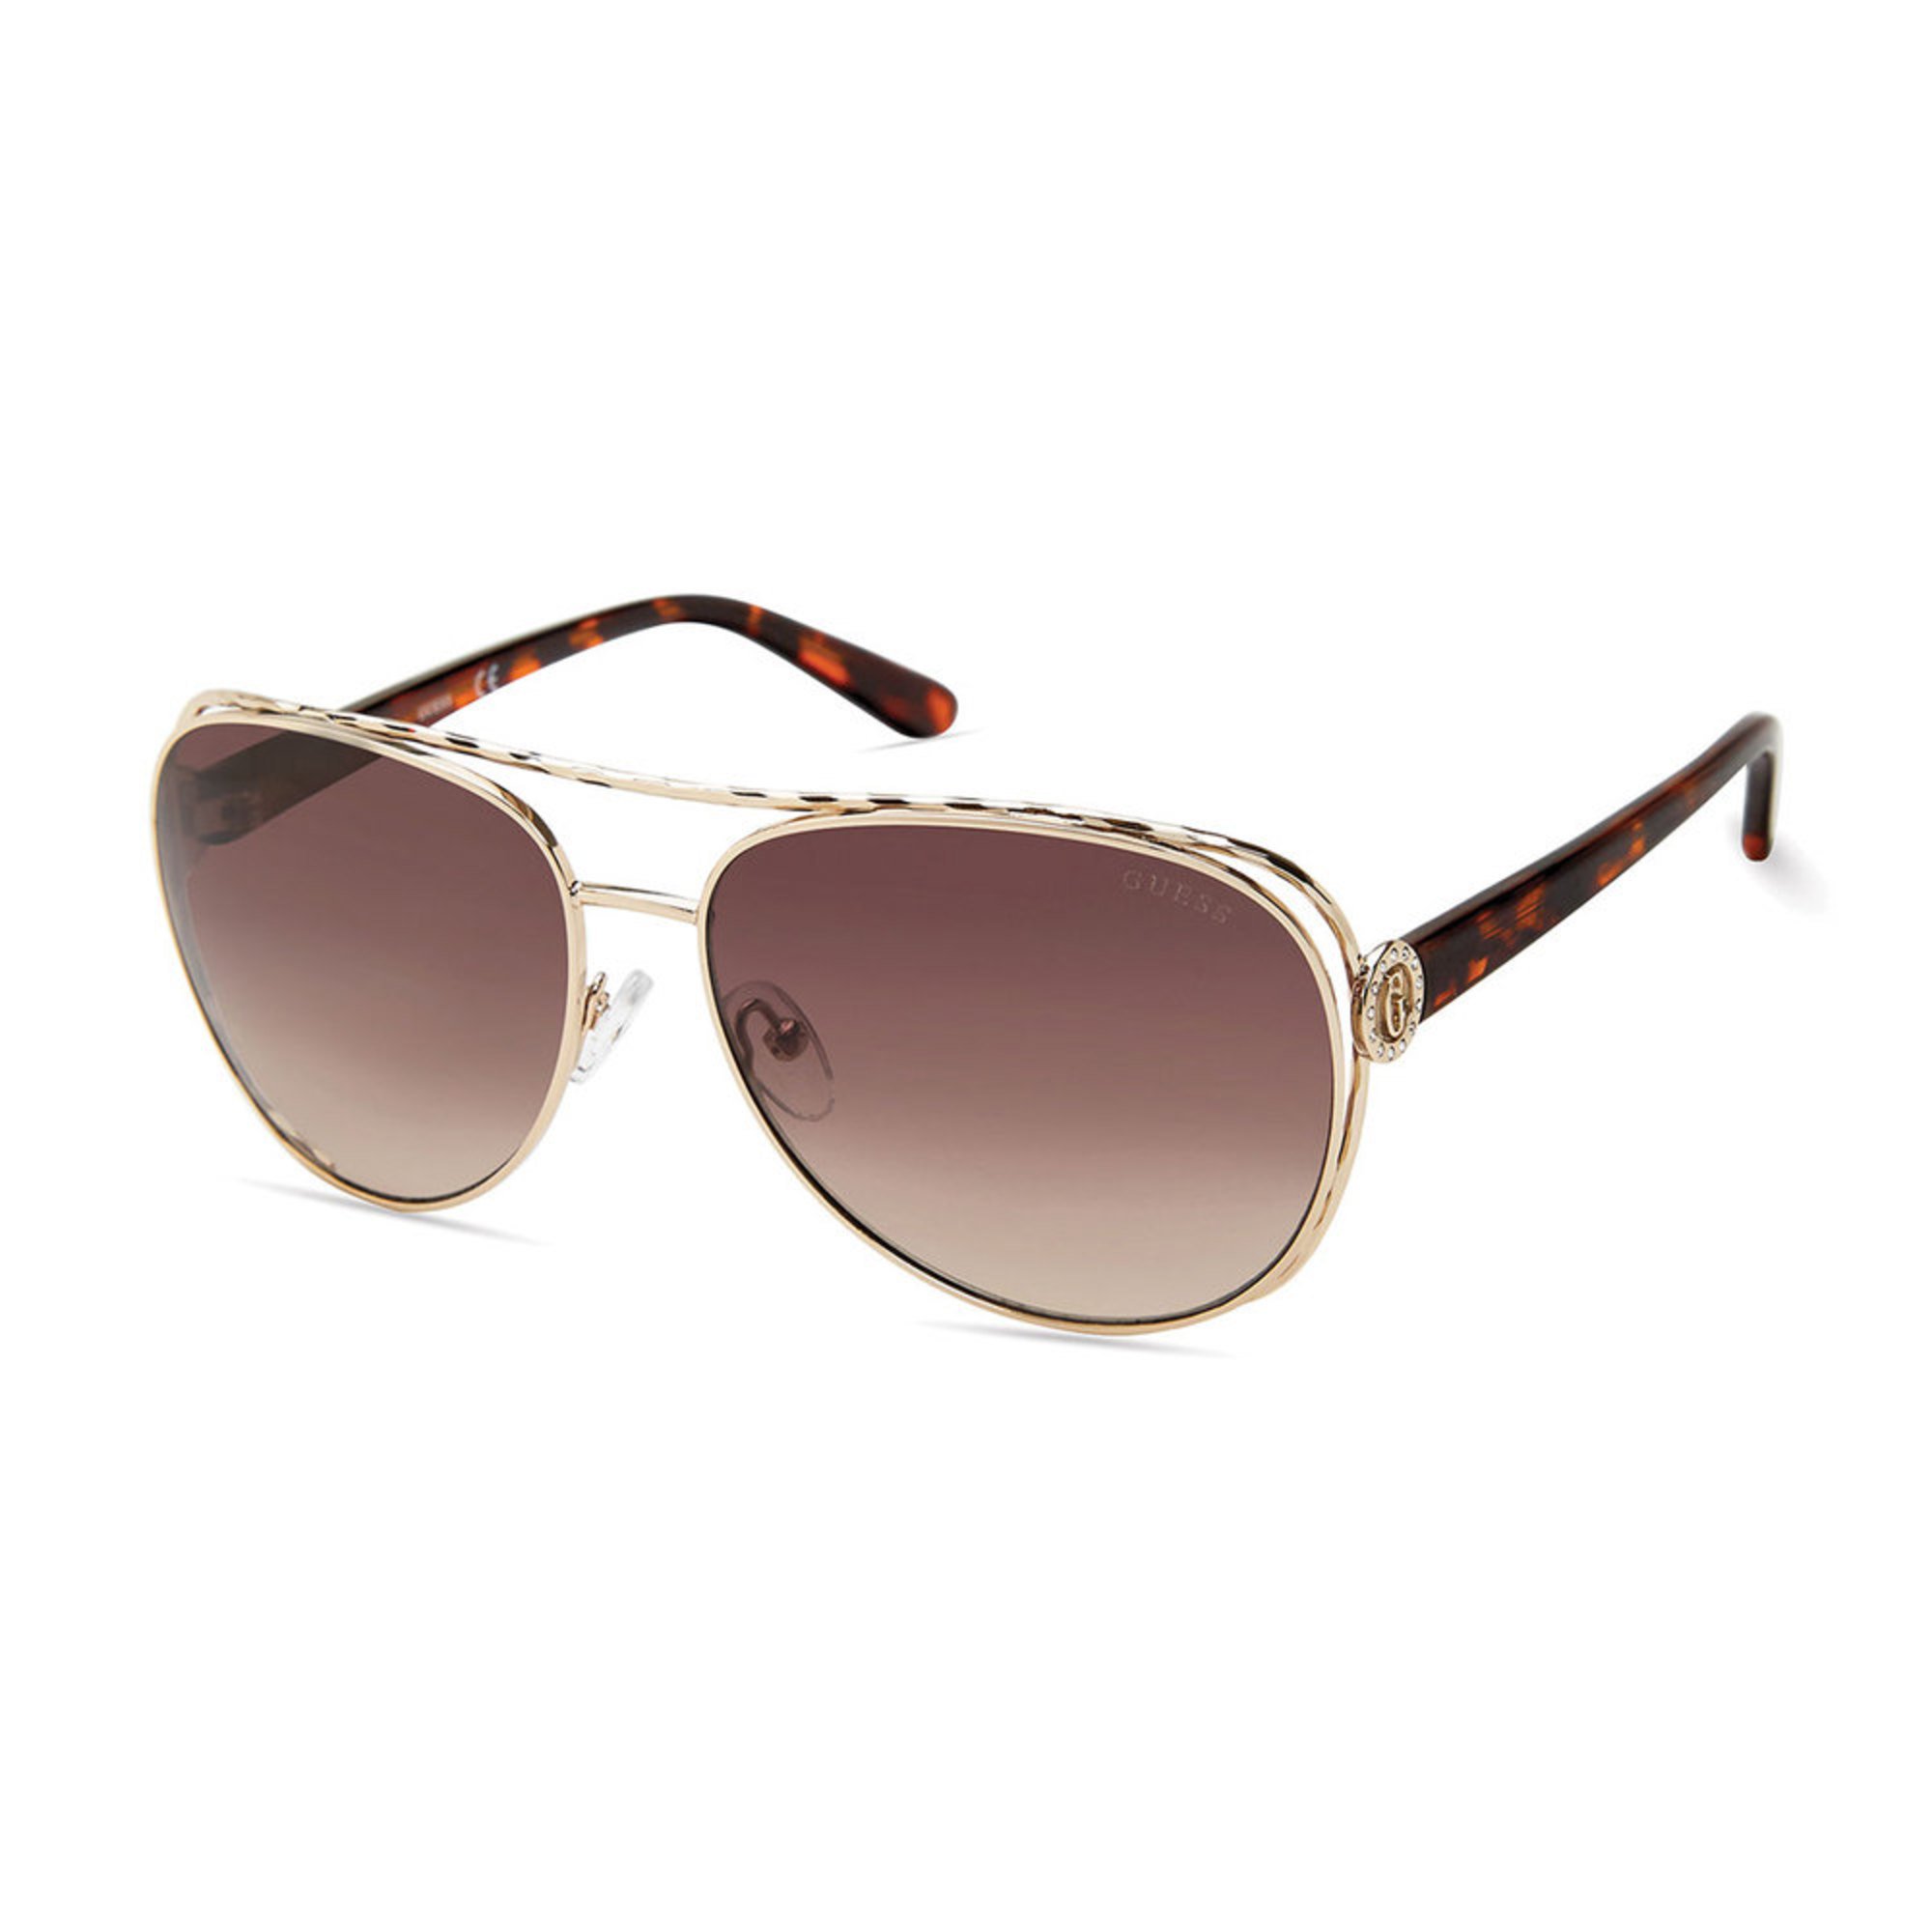 Guess Women's Gold Metal Frame Brown Lens Sunglasses, 58mm | Women's ...